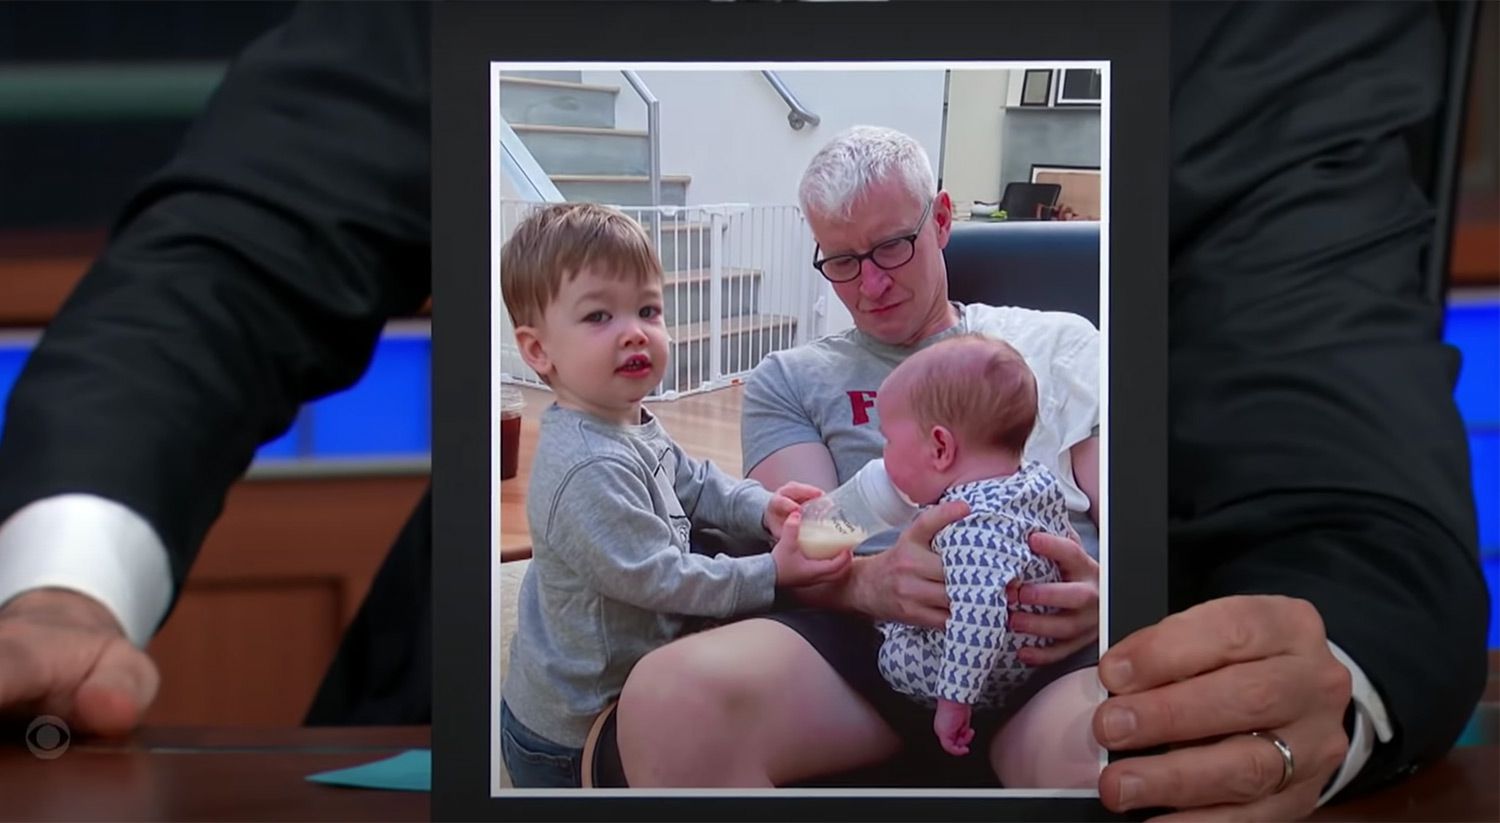 Anderson Cooper Says He and Son Wyatt Make Fun of Newborn Son Sebastian